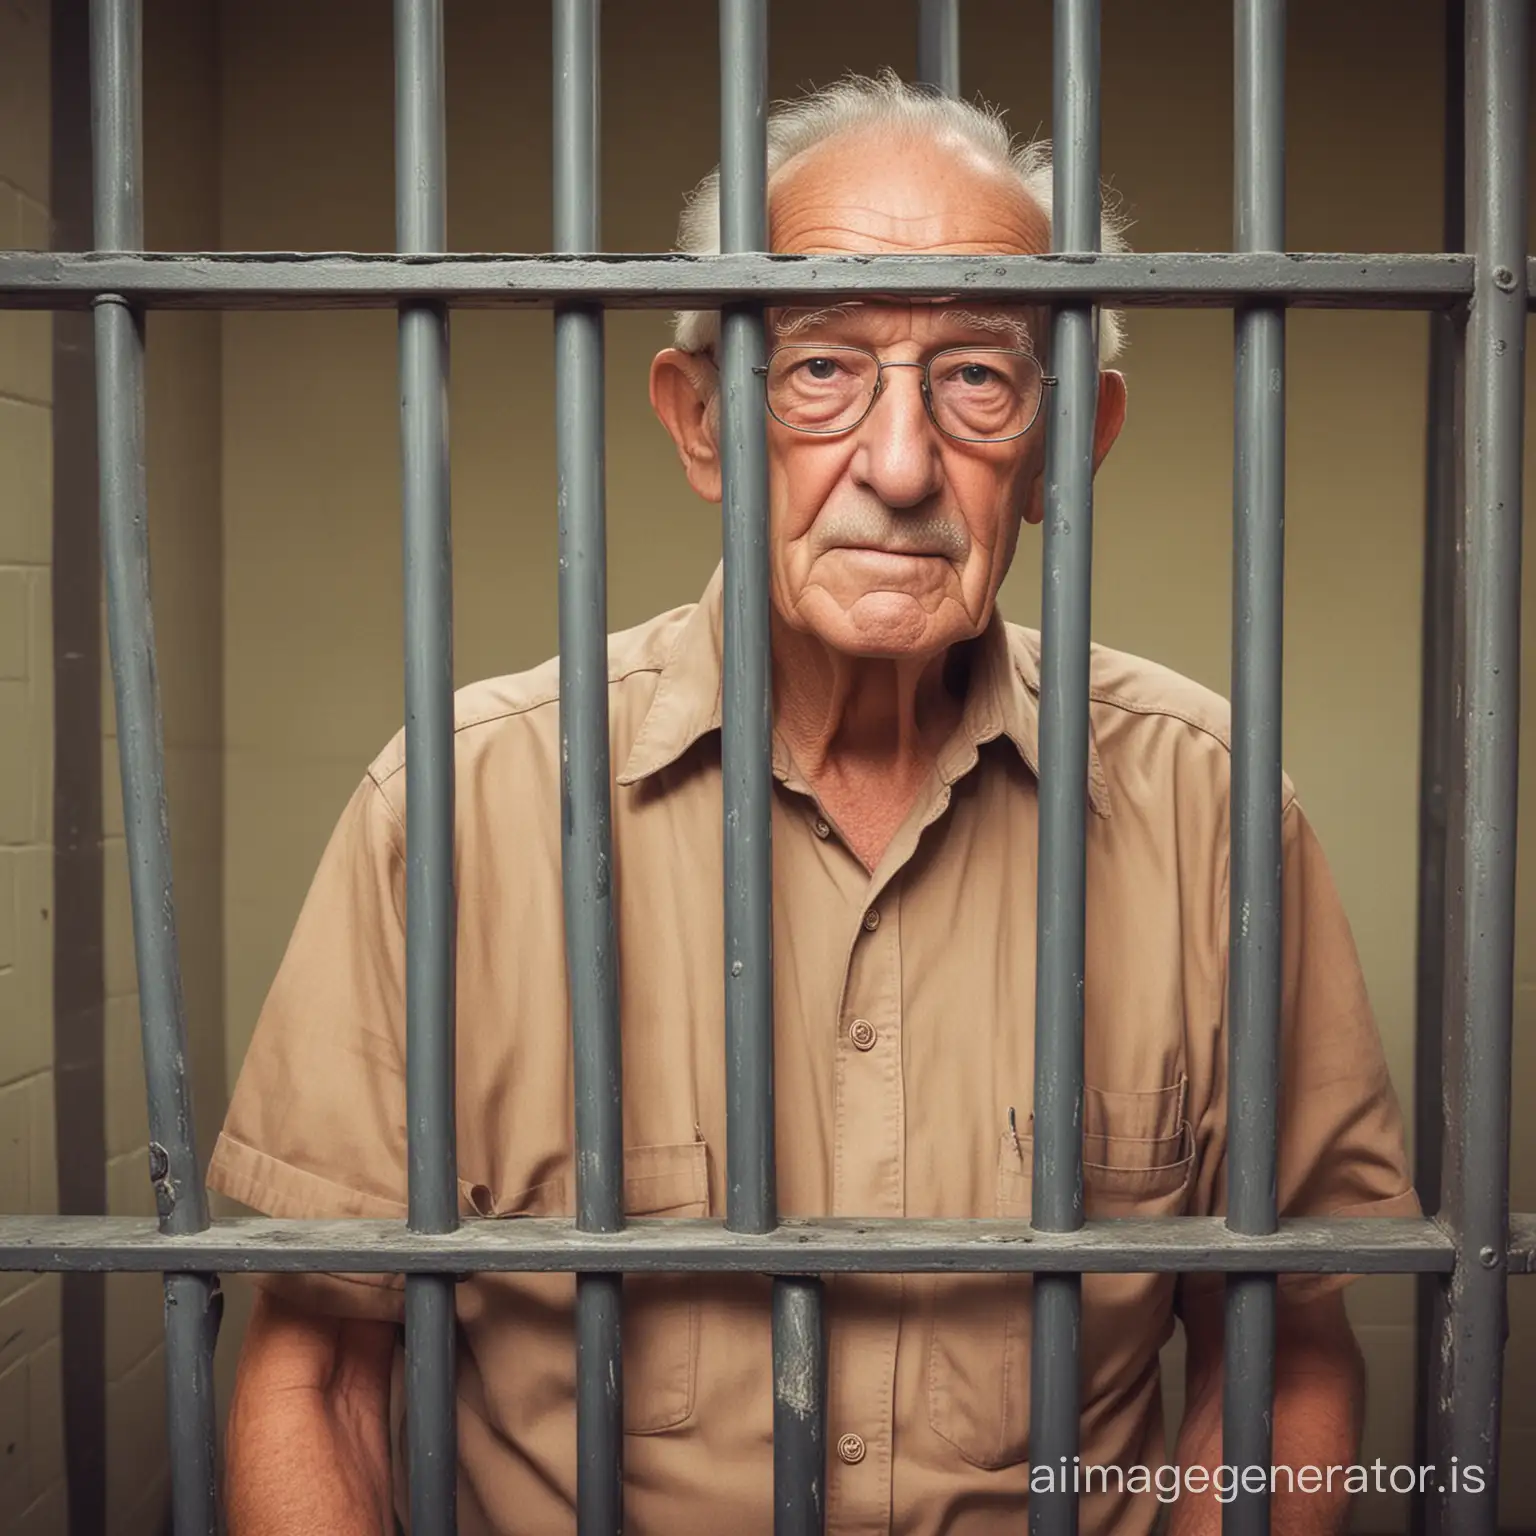 Elderly-Man-Reflecting-in-Prison-Cell